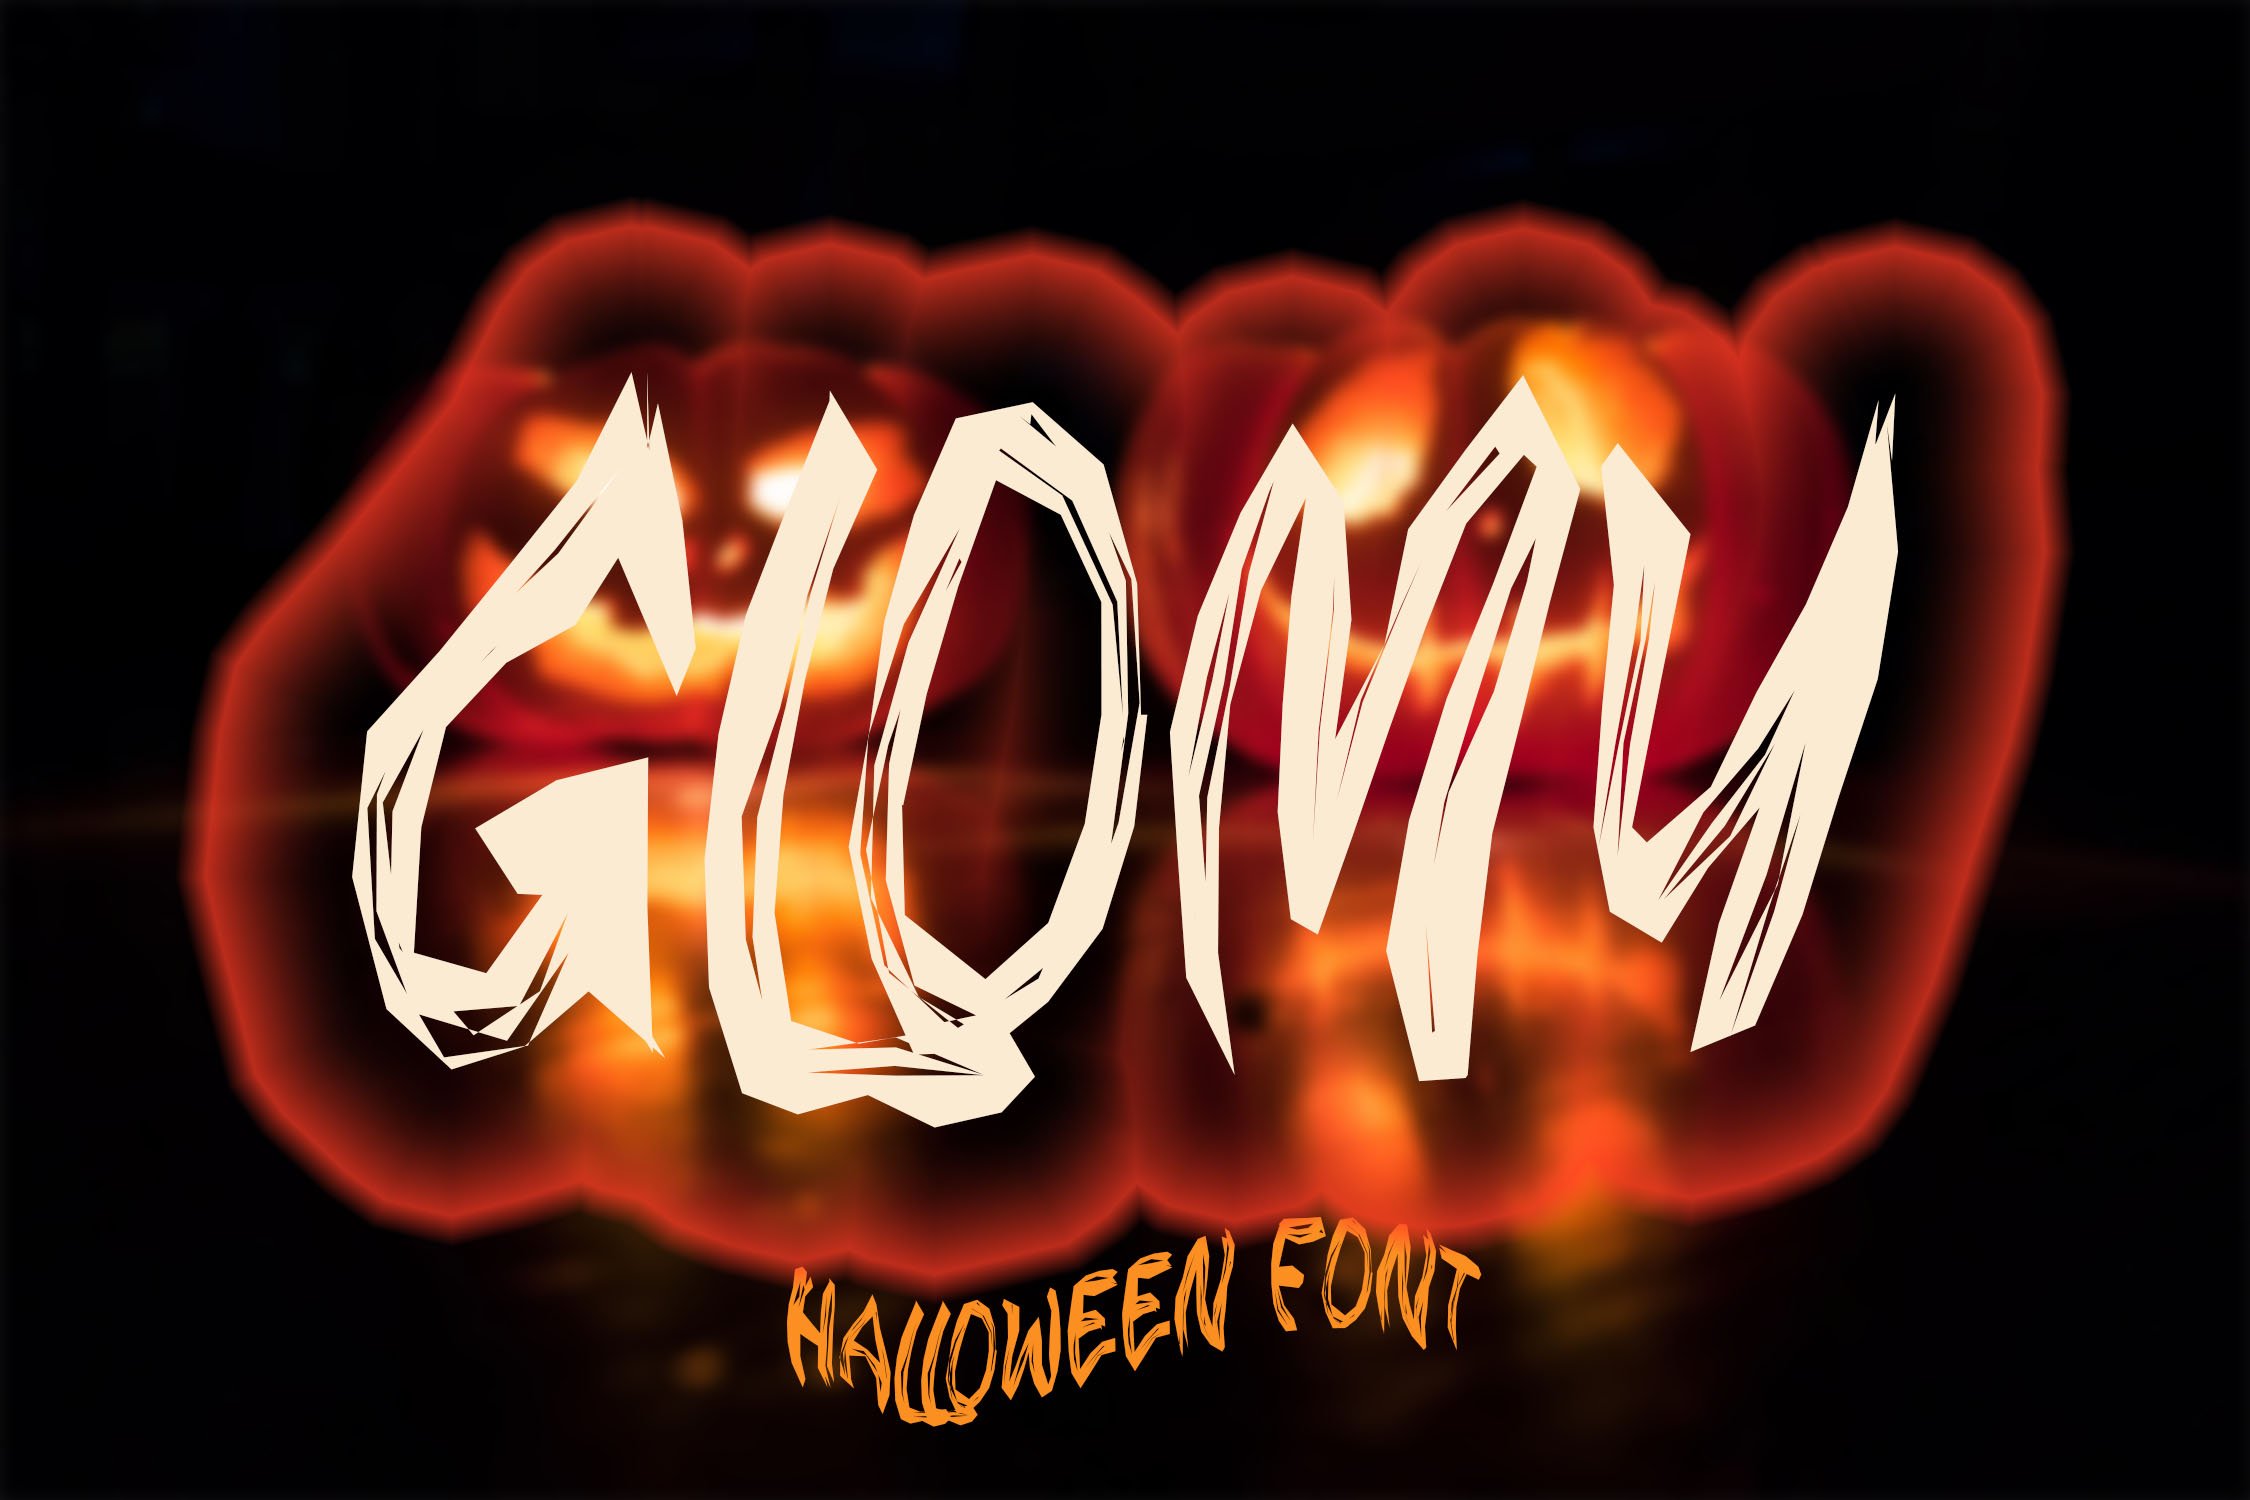 GLOMY - Halloween Horror Font cover image.